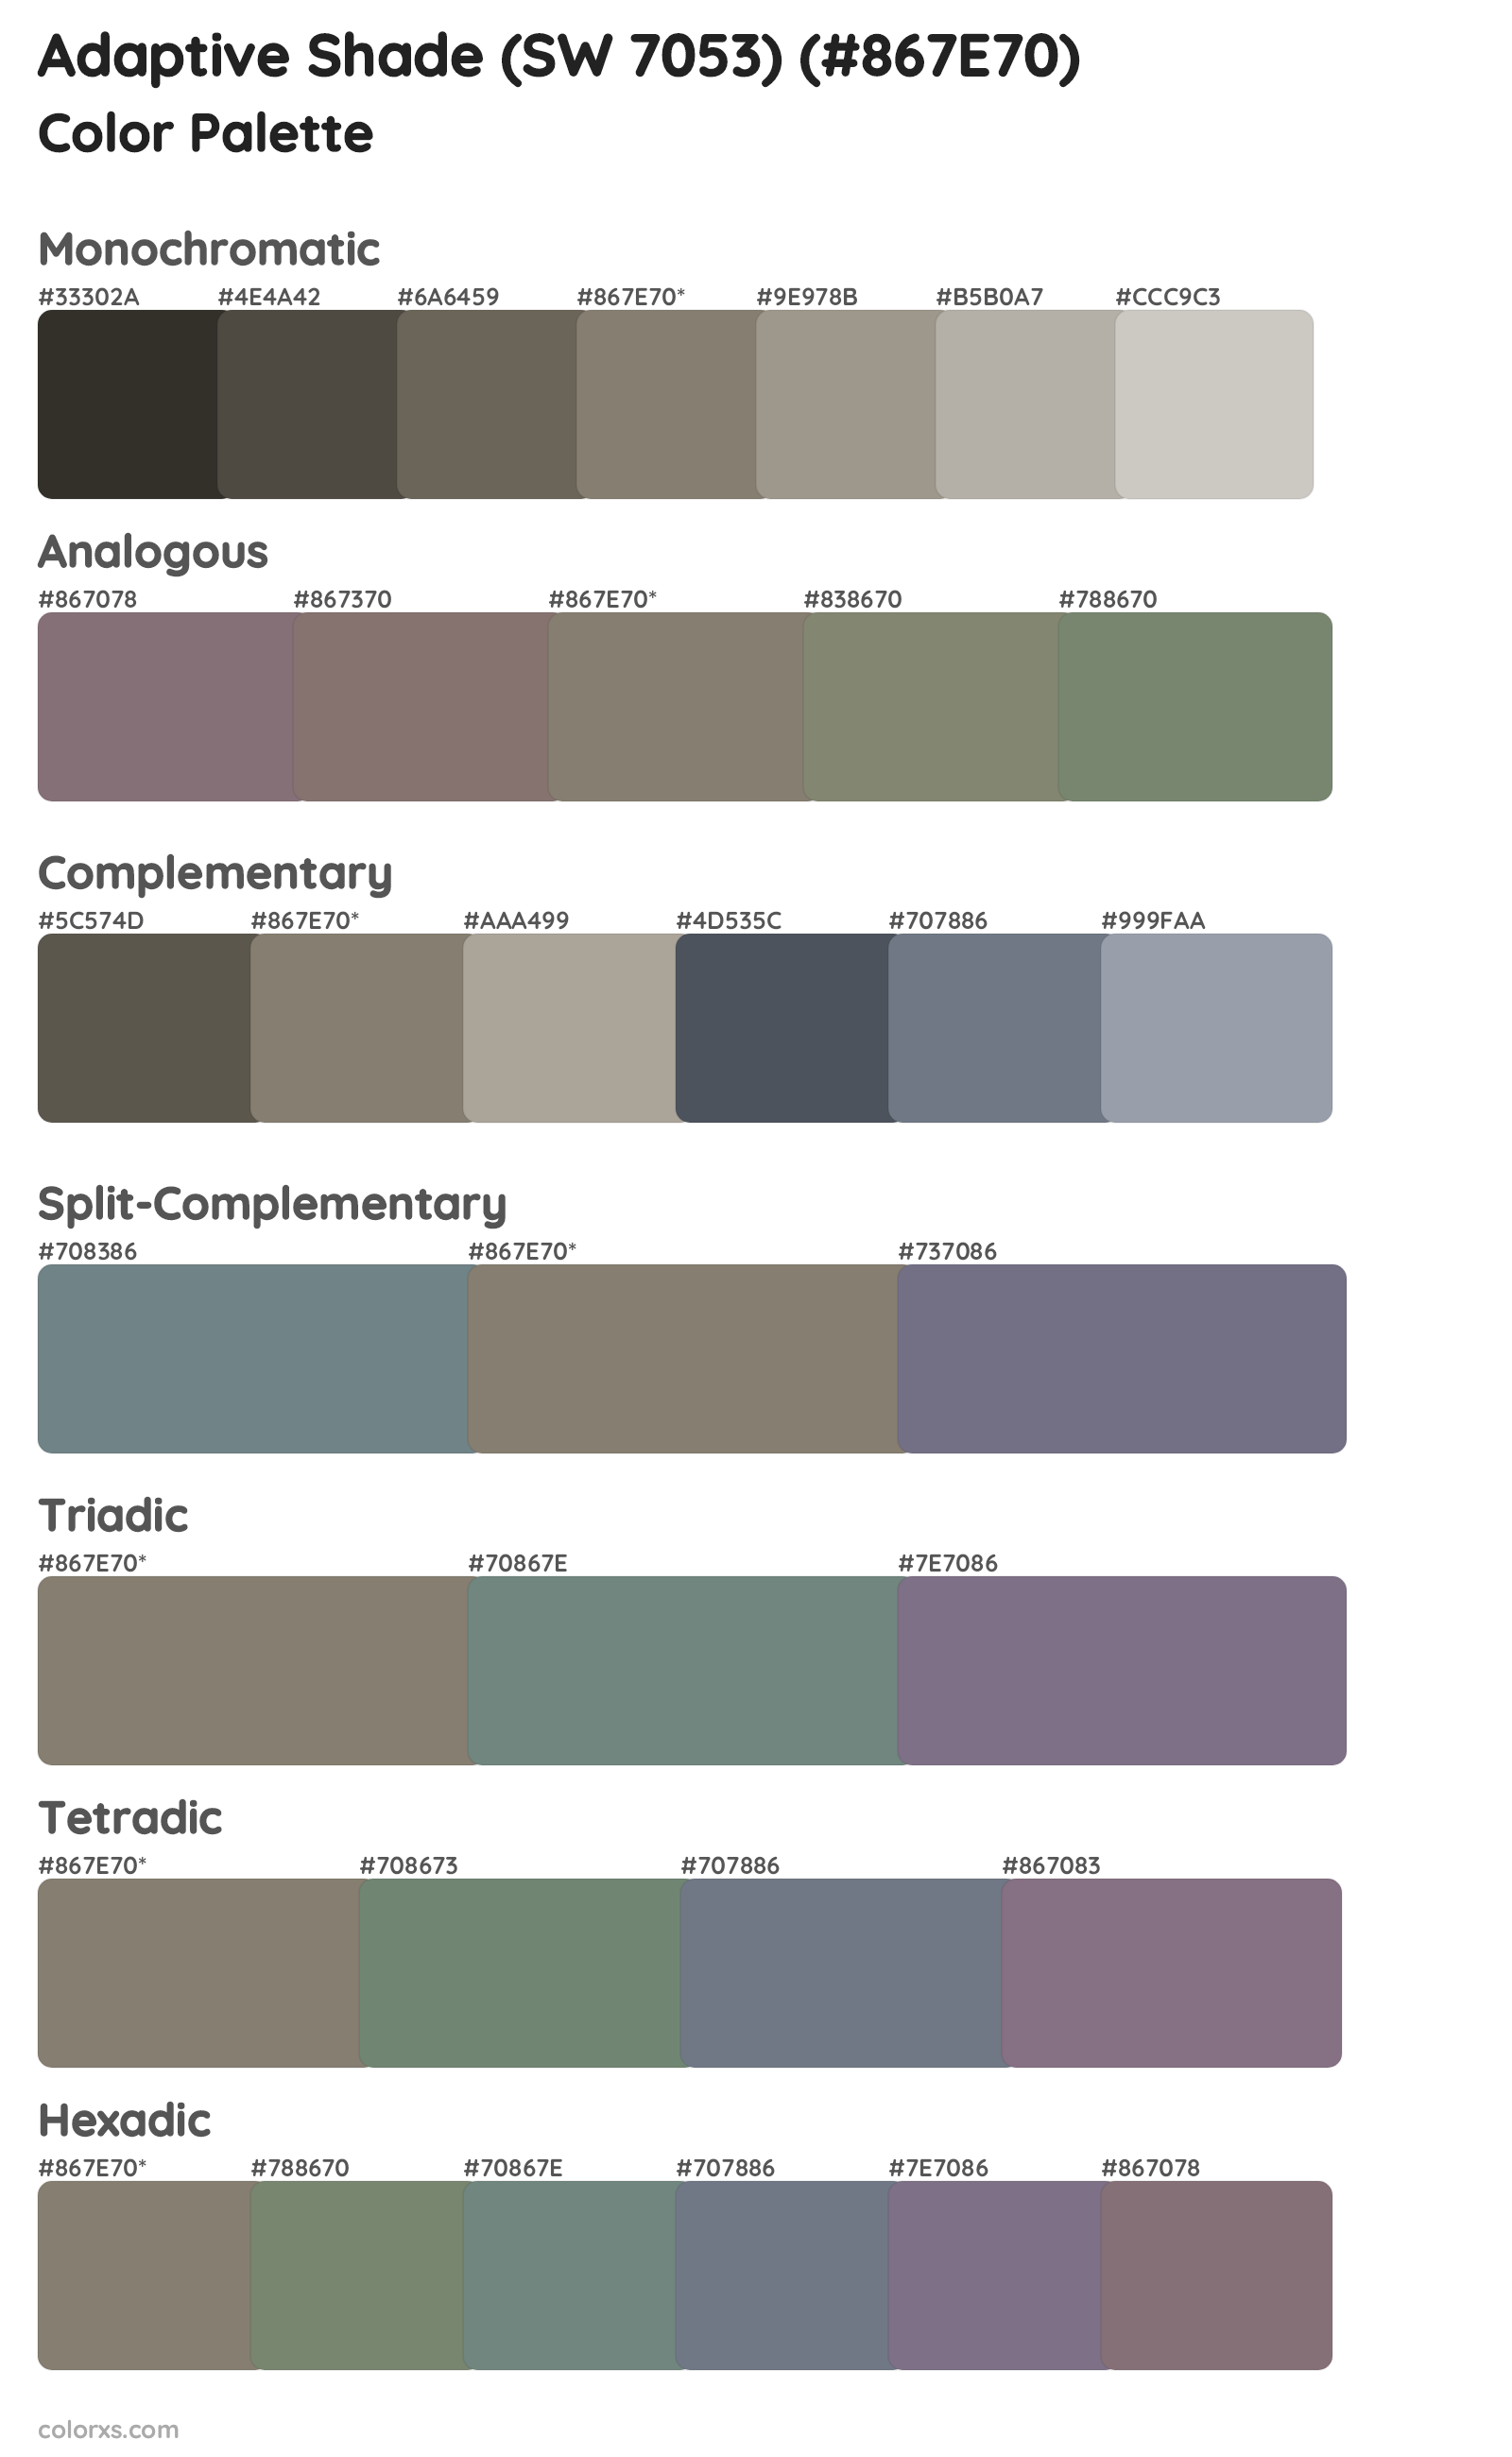 Adaptive Shade (SW 7053) Color Scheme Palettes